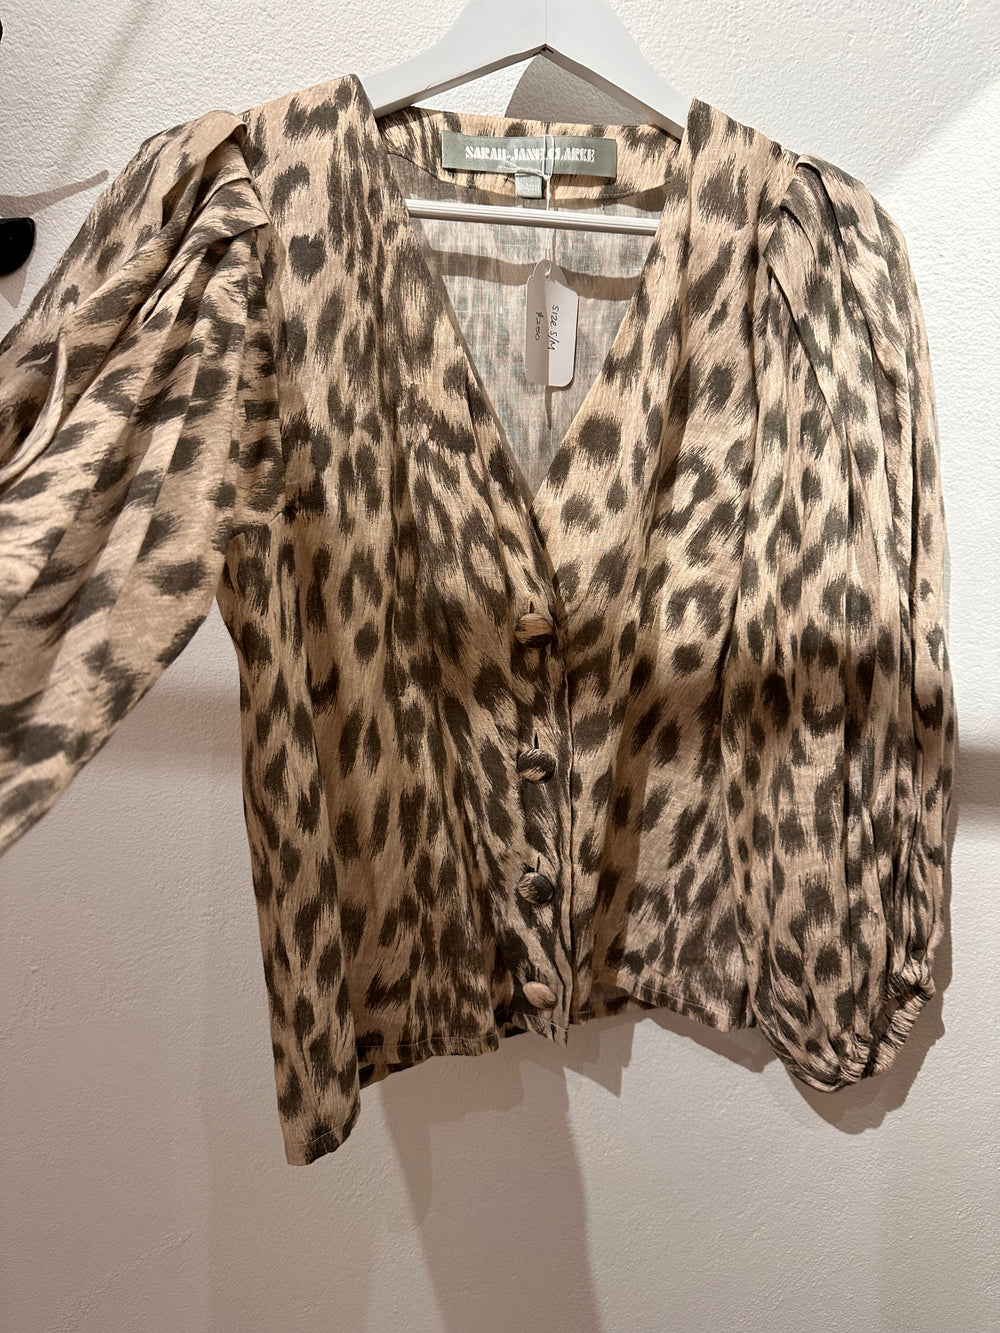 SARAH JANE CLARKE Leopard Jacket/Shirt S/M